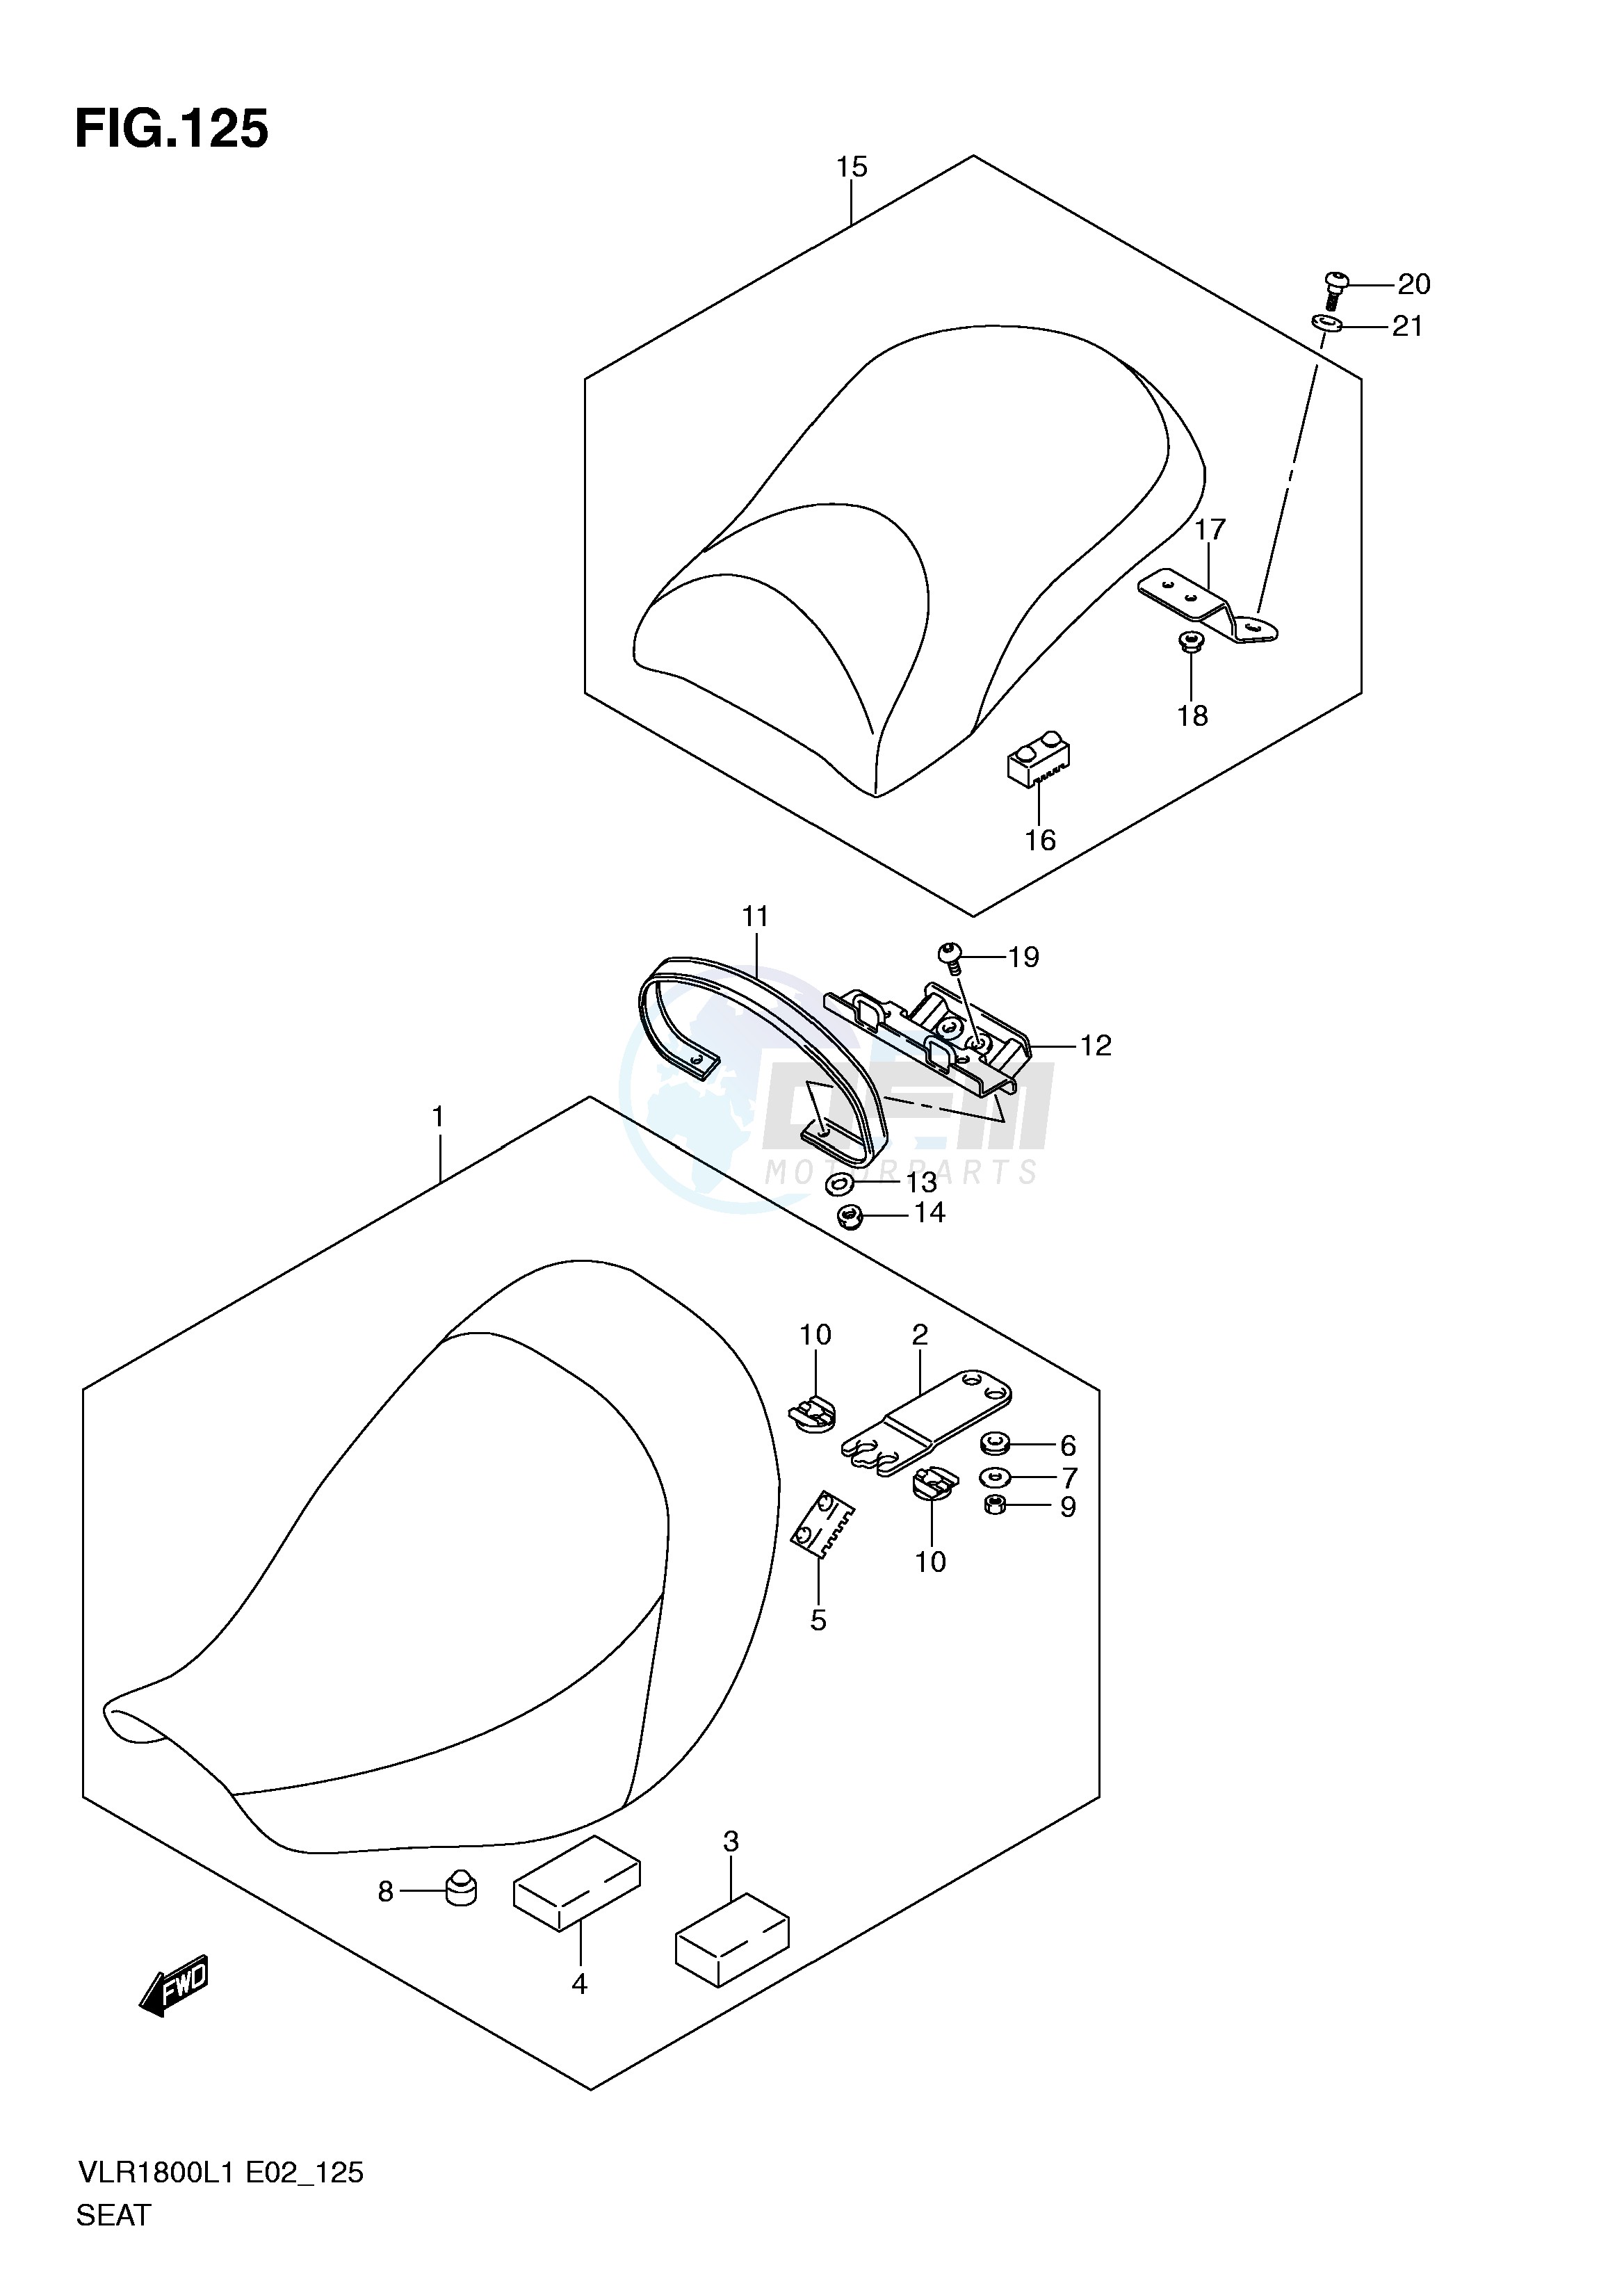 SEAT (VLR1800L1 E2) blueprint